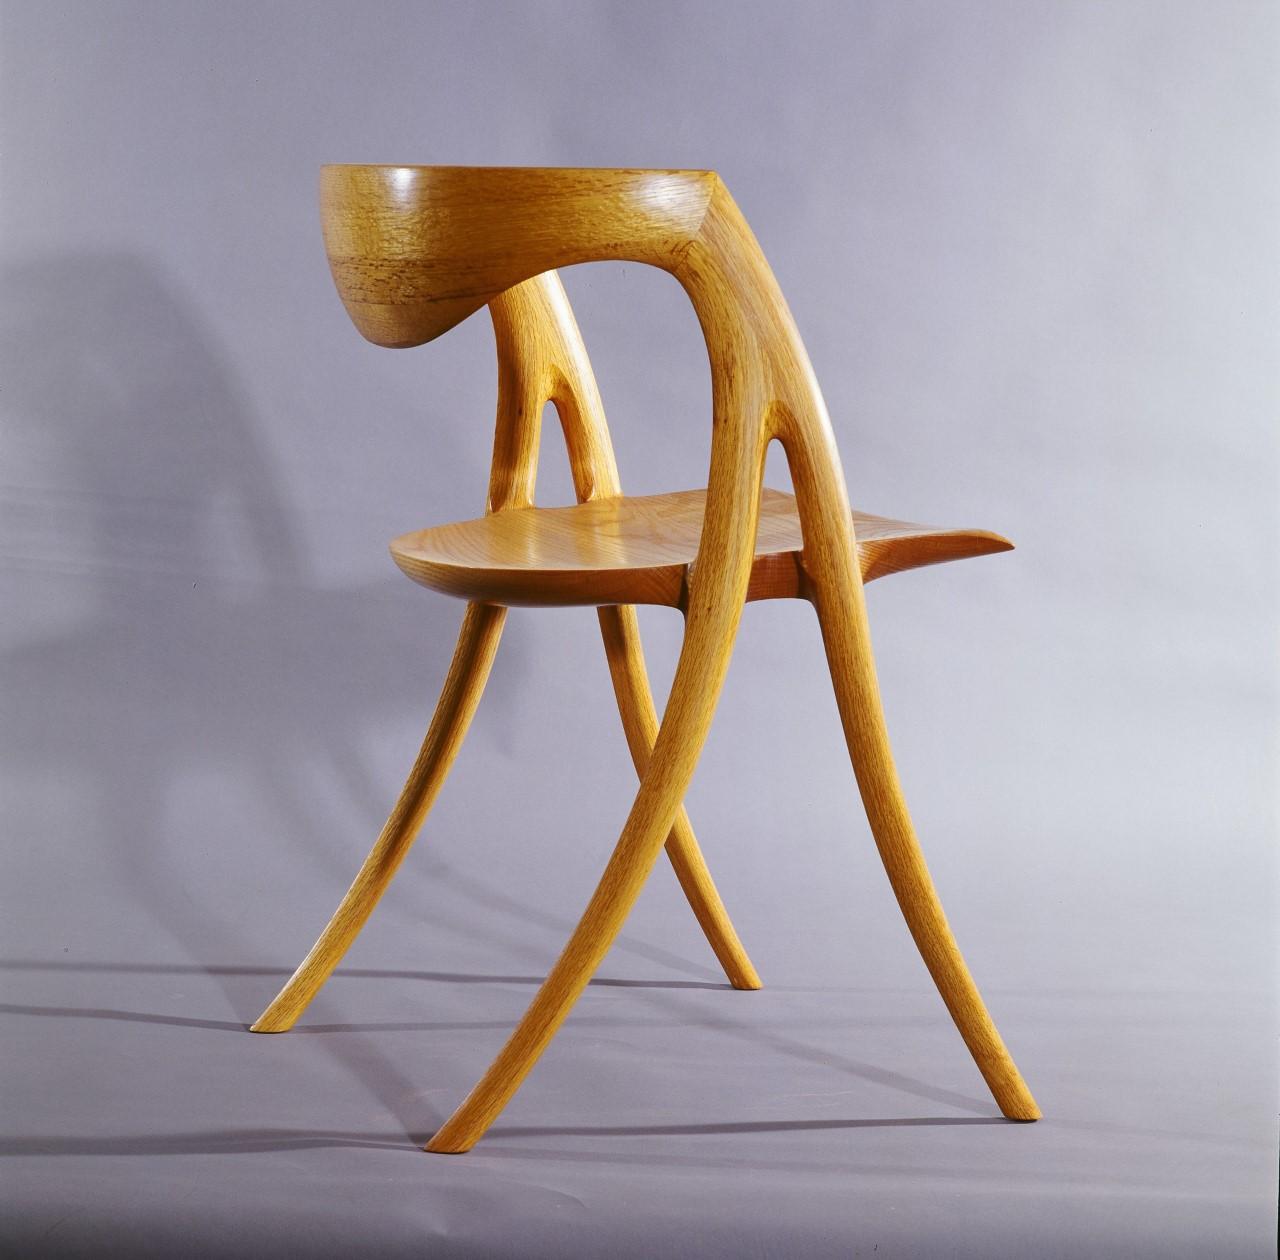 chair made of sticks